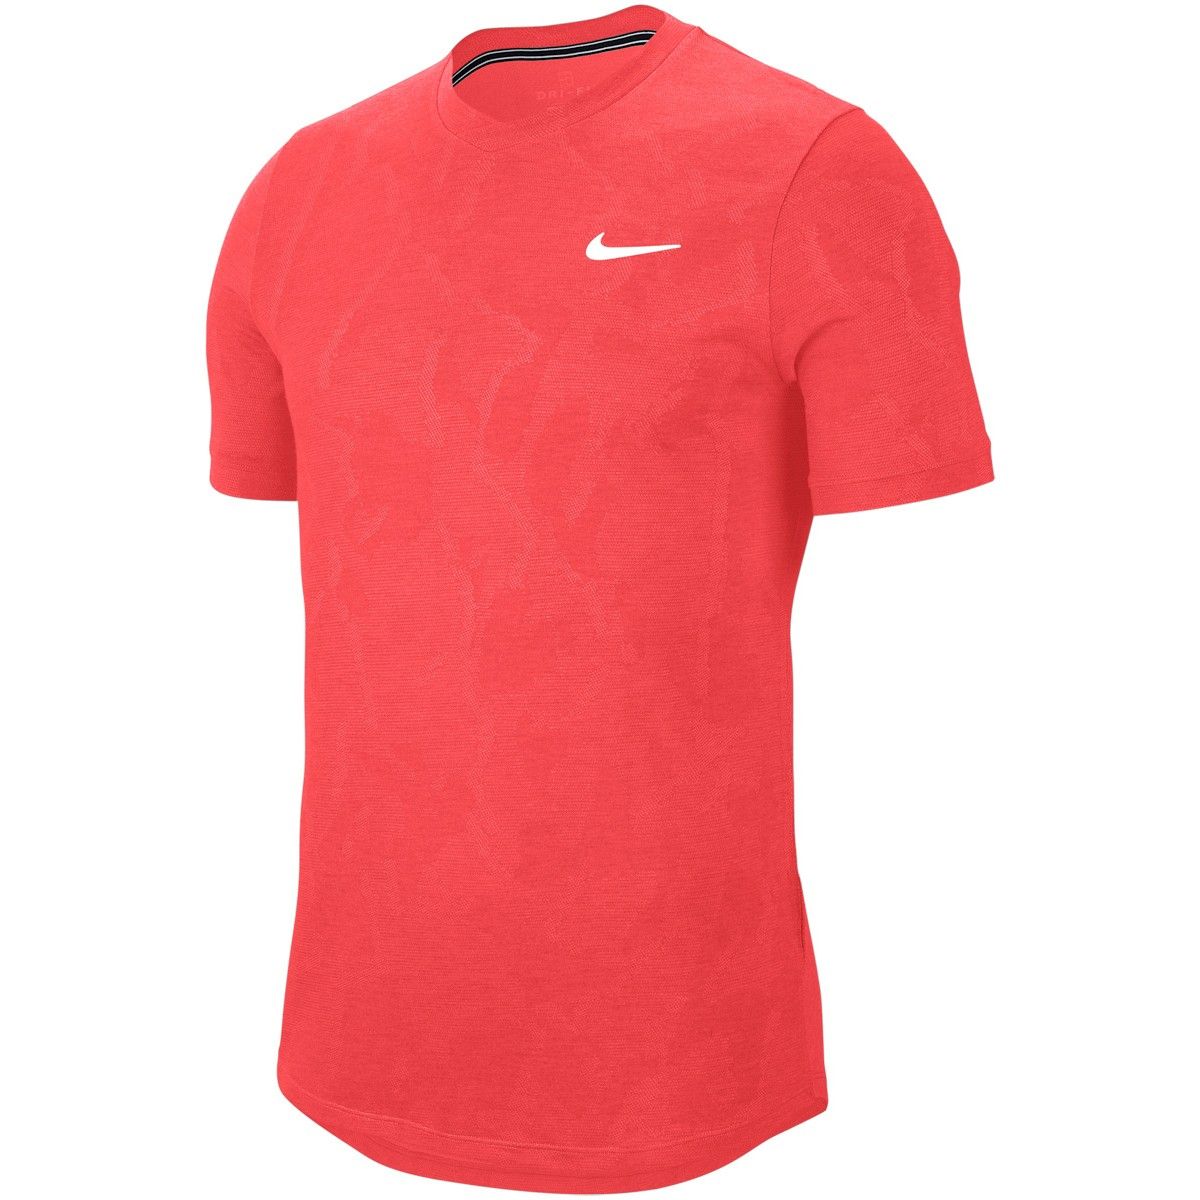 NikeCourt Challenger Men's Short-Sleeve Tennis Top BV0766-64